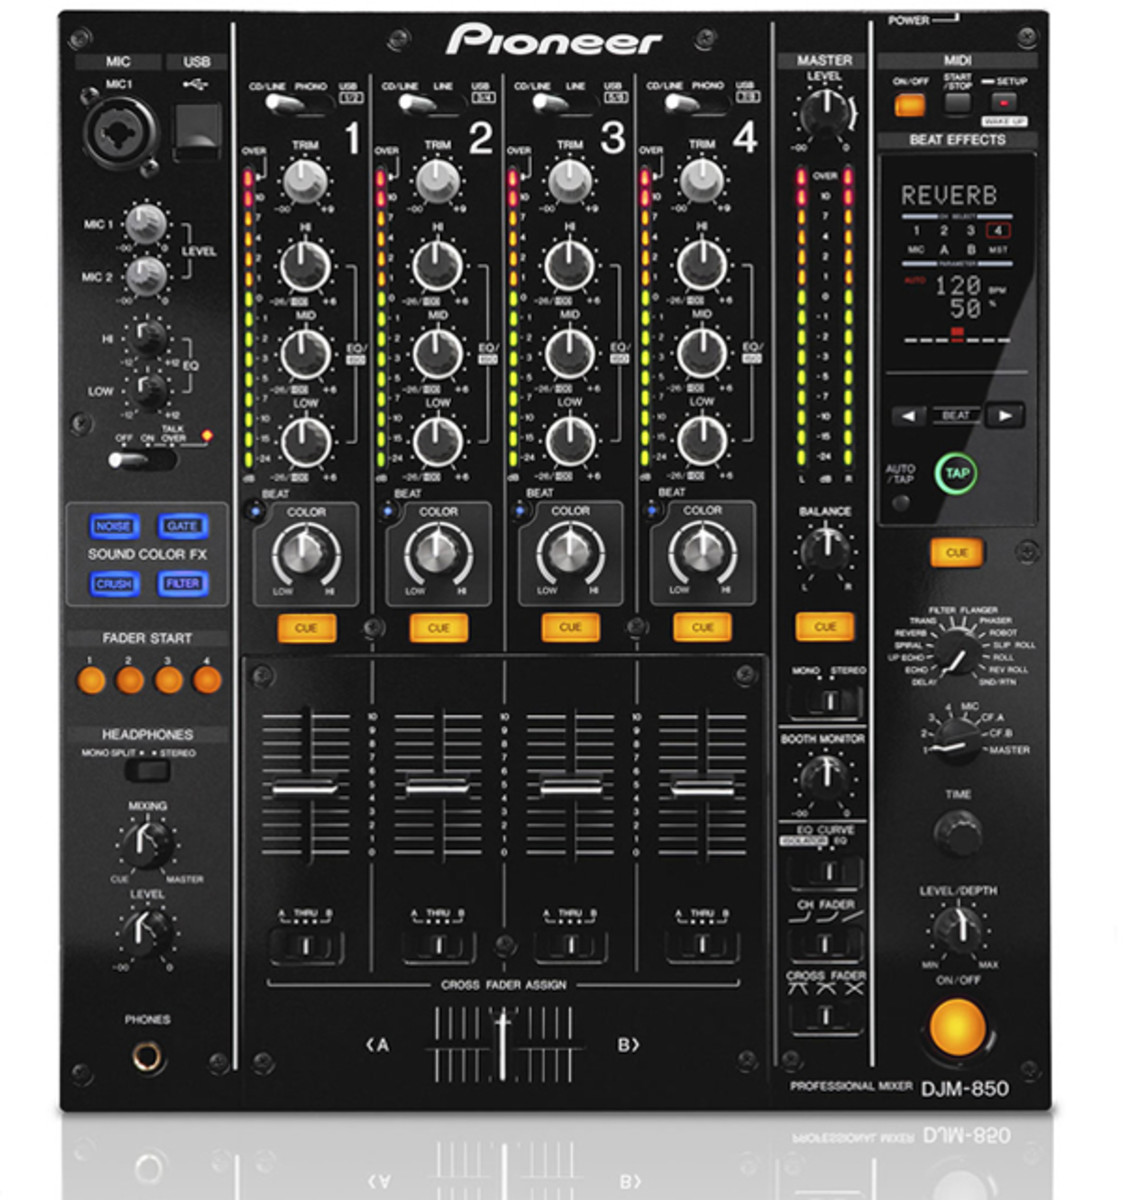 Pioneer djm- 800 professional dj mixer manual 2017